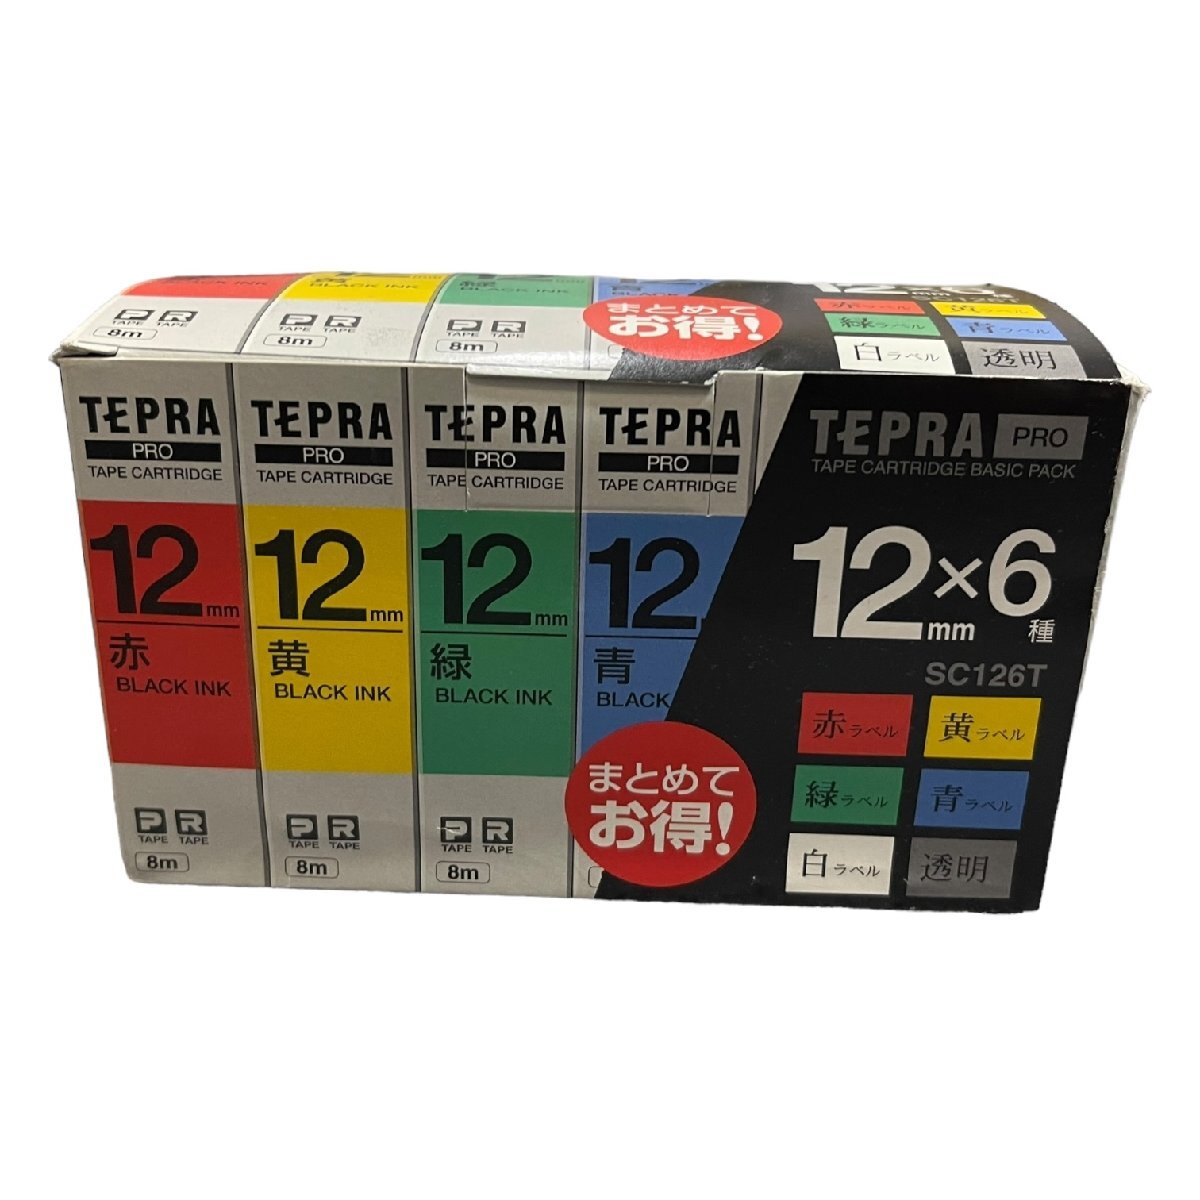 L76490RL【未開封】TEPRA PRO テプラ プロ 12mmx8m 6種類 テプラプロ テープカートリッジ オフィス用品の画像1